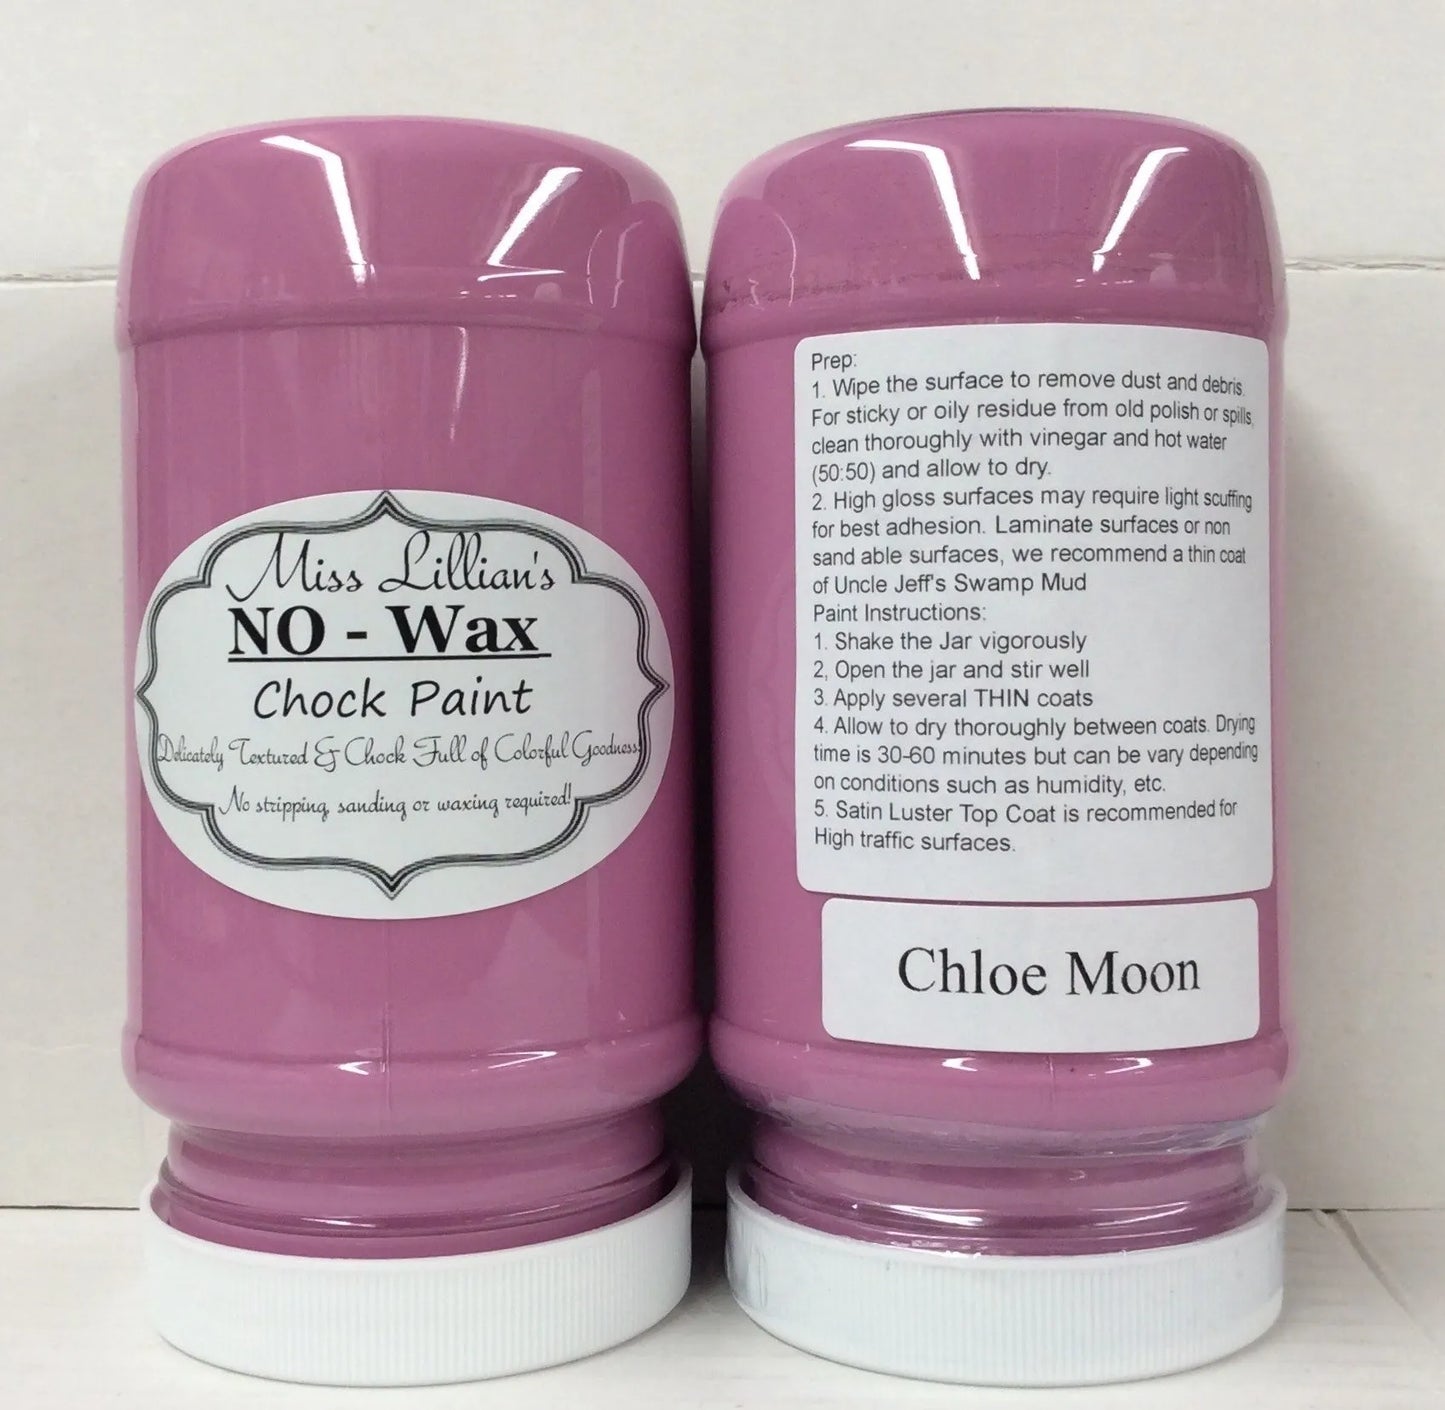 Chloe Moon - Pink Chalk Paint 8oz - Miss Lilian's No Wax Chock Paint